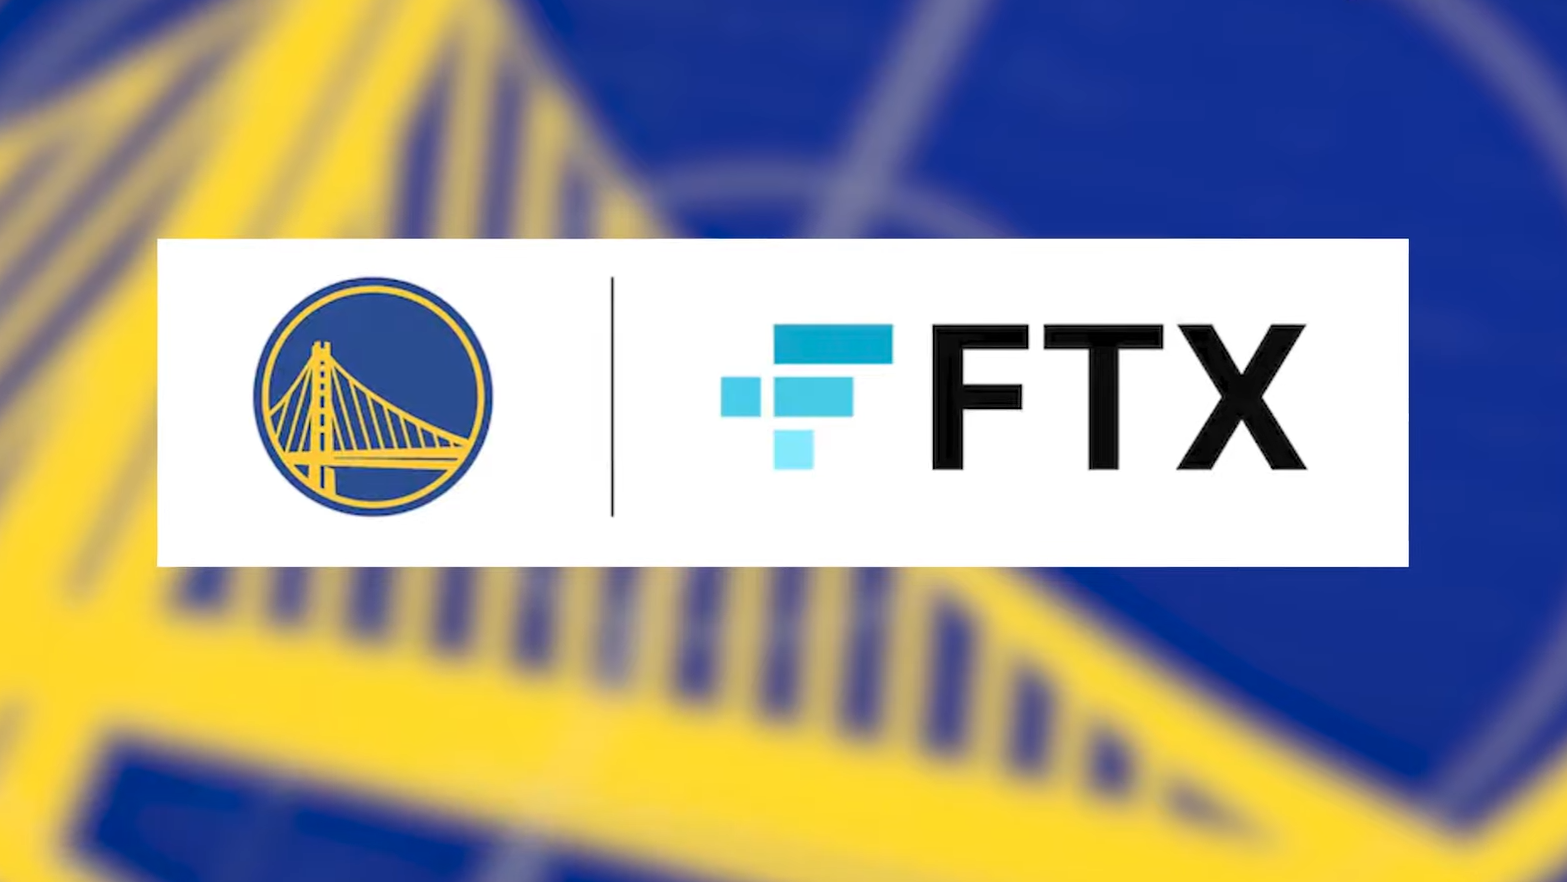 Stephen Curry et les Warriors attaqués en justice après la faillite de FTX